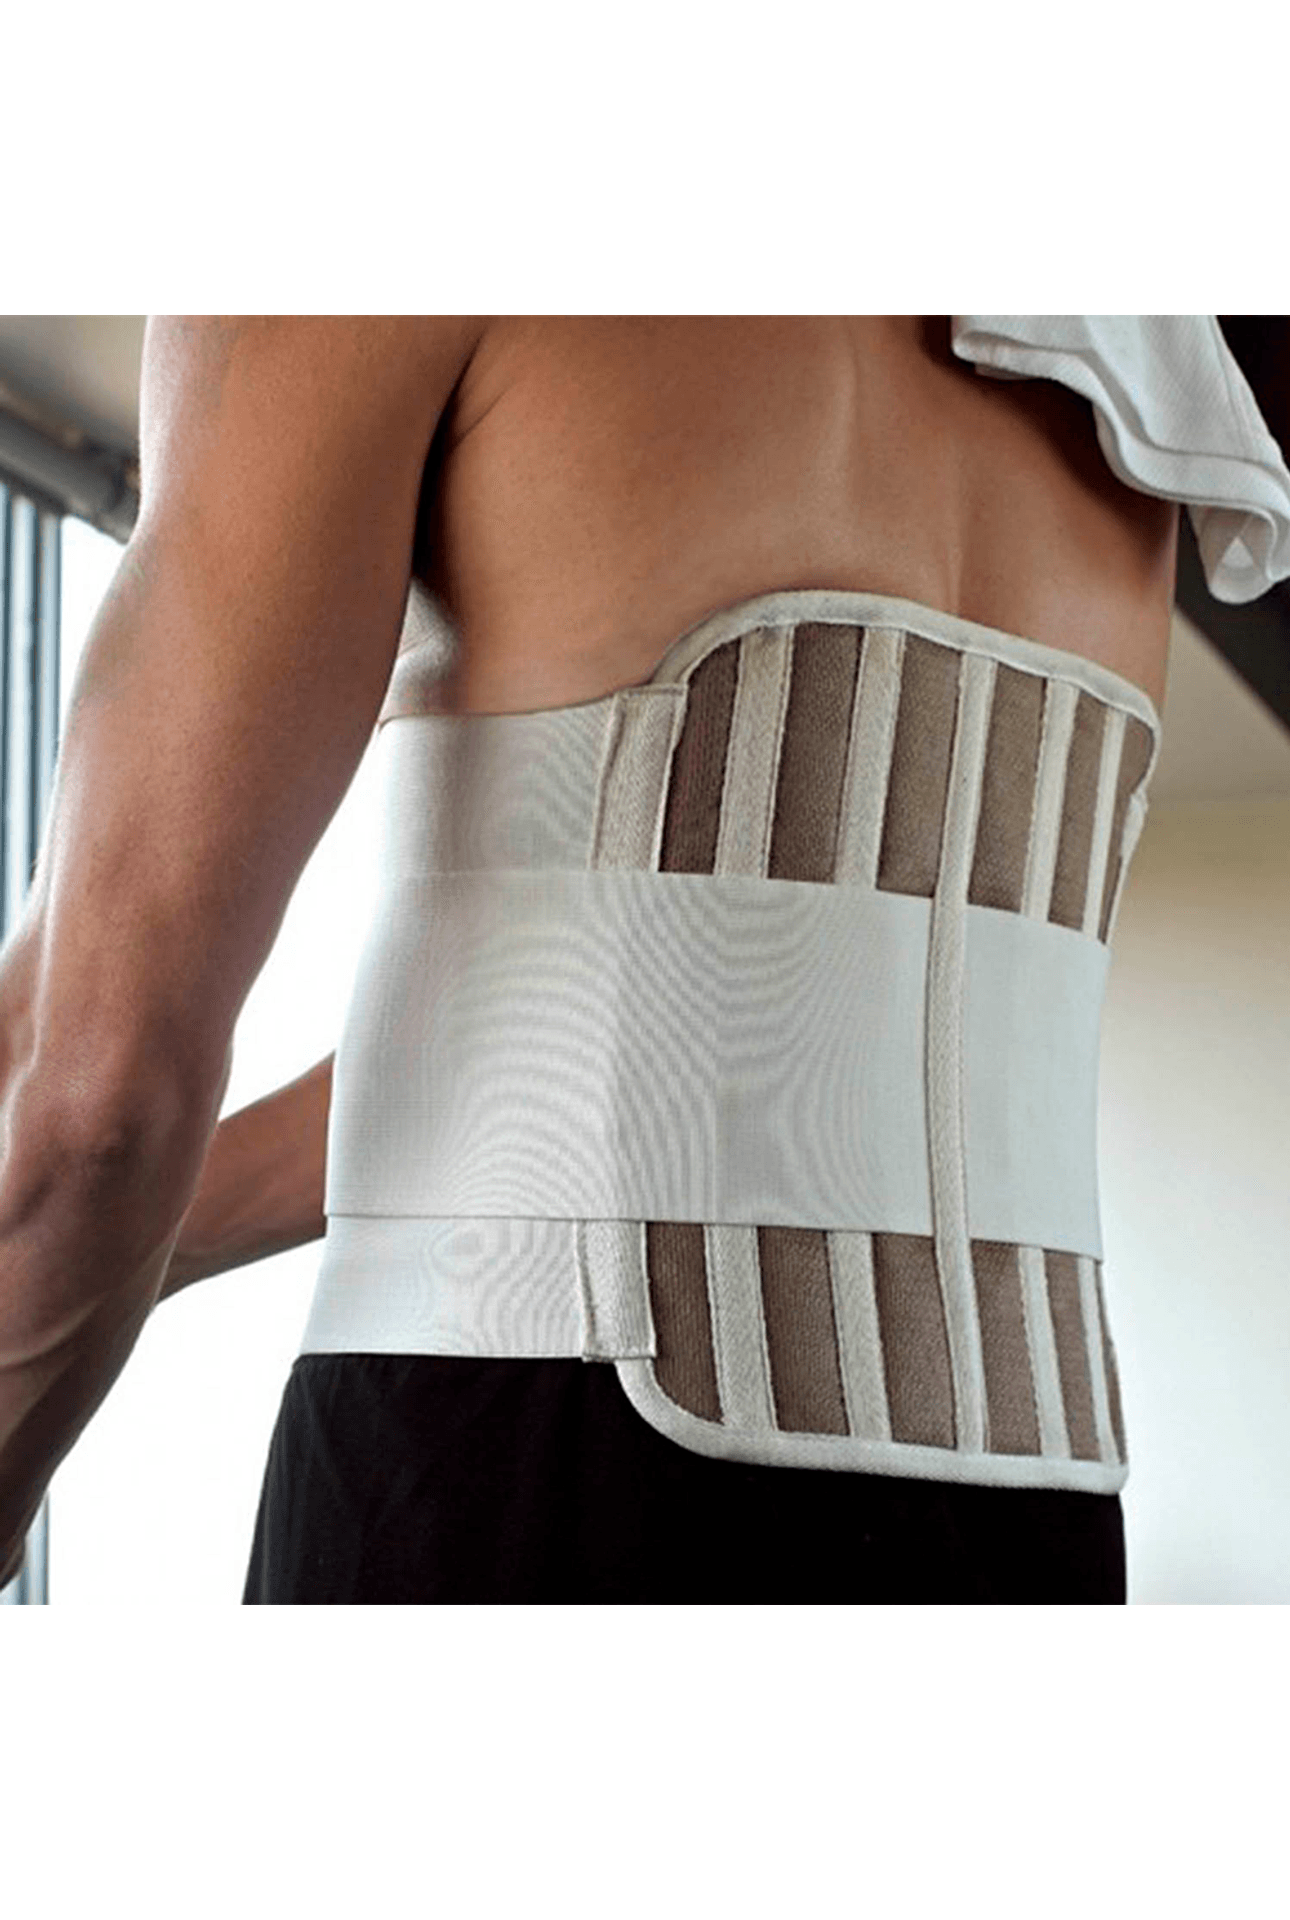 Faja abdominal sacro lumbar ballenada – ORTOPEDIA BAGUALITO: Productos de  Ortopedia y Rehabilitación